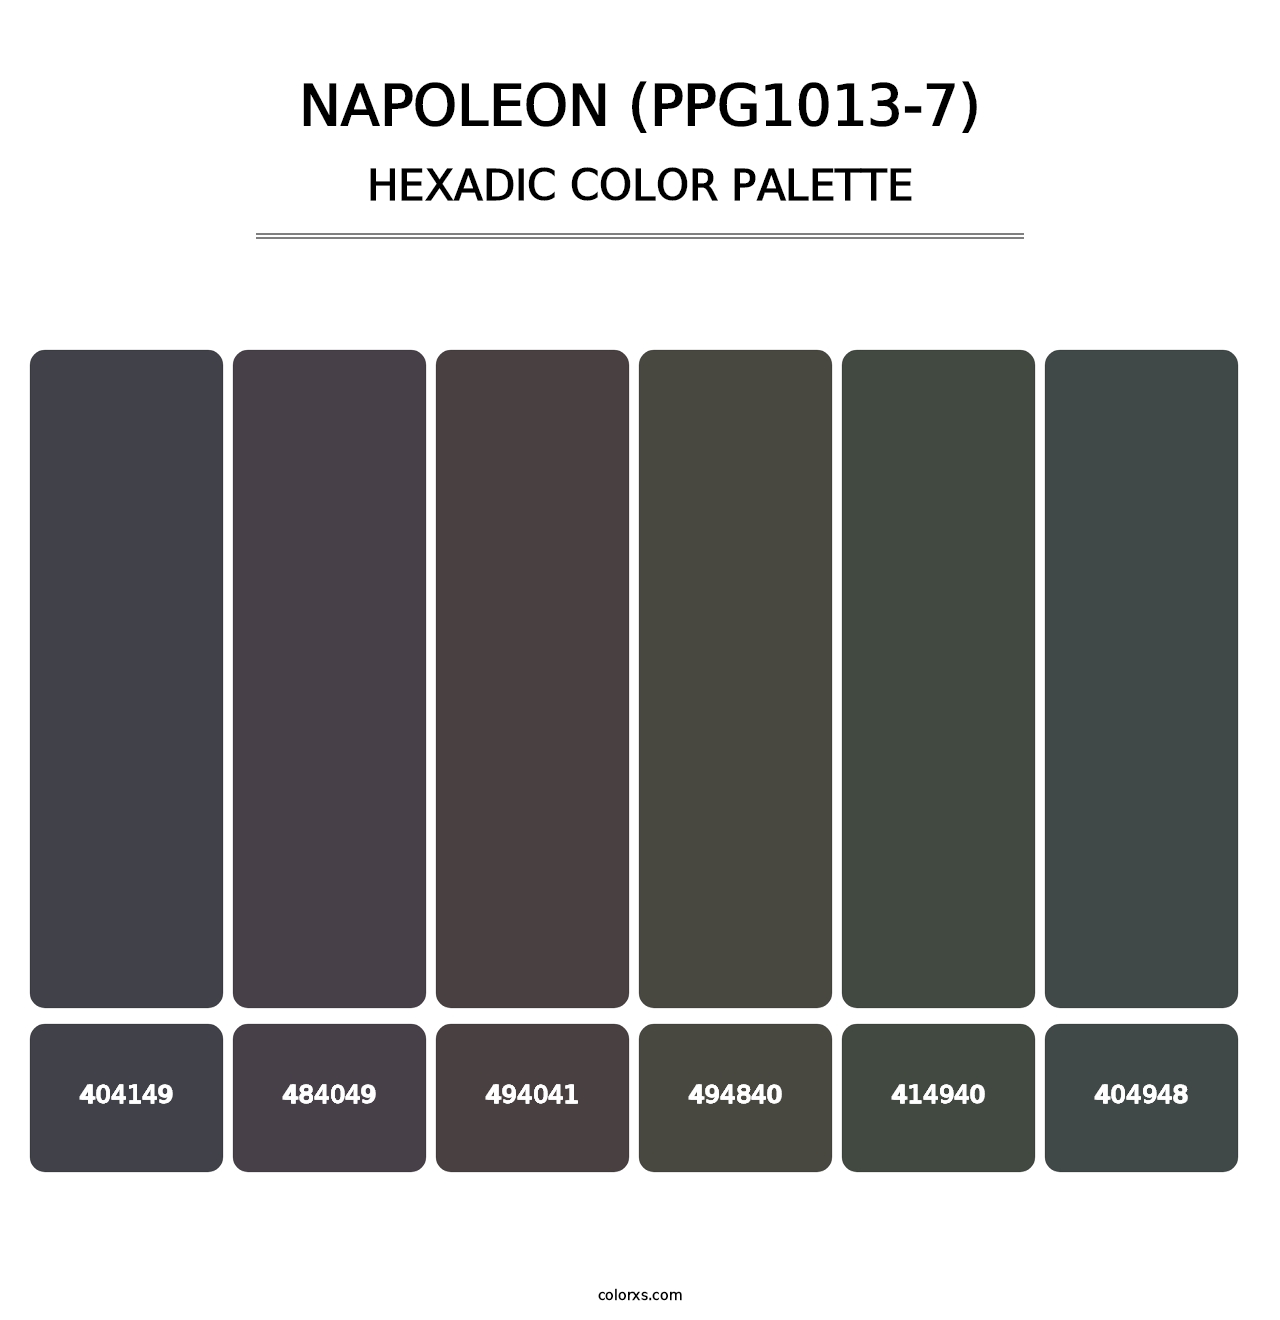 Napoleon (PPG1013-7) - Hexadic Color Palette